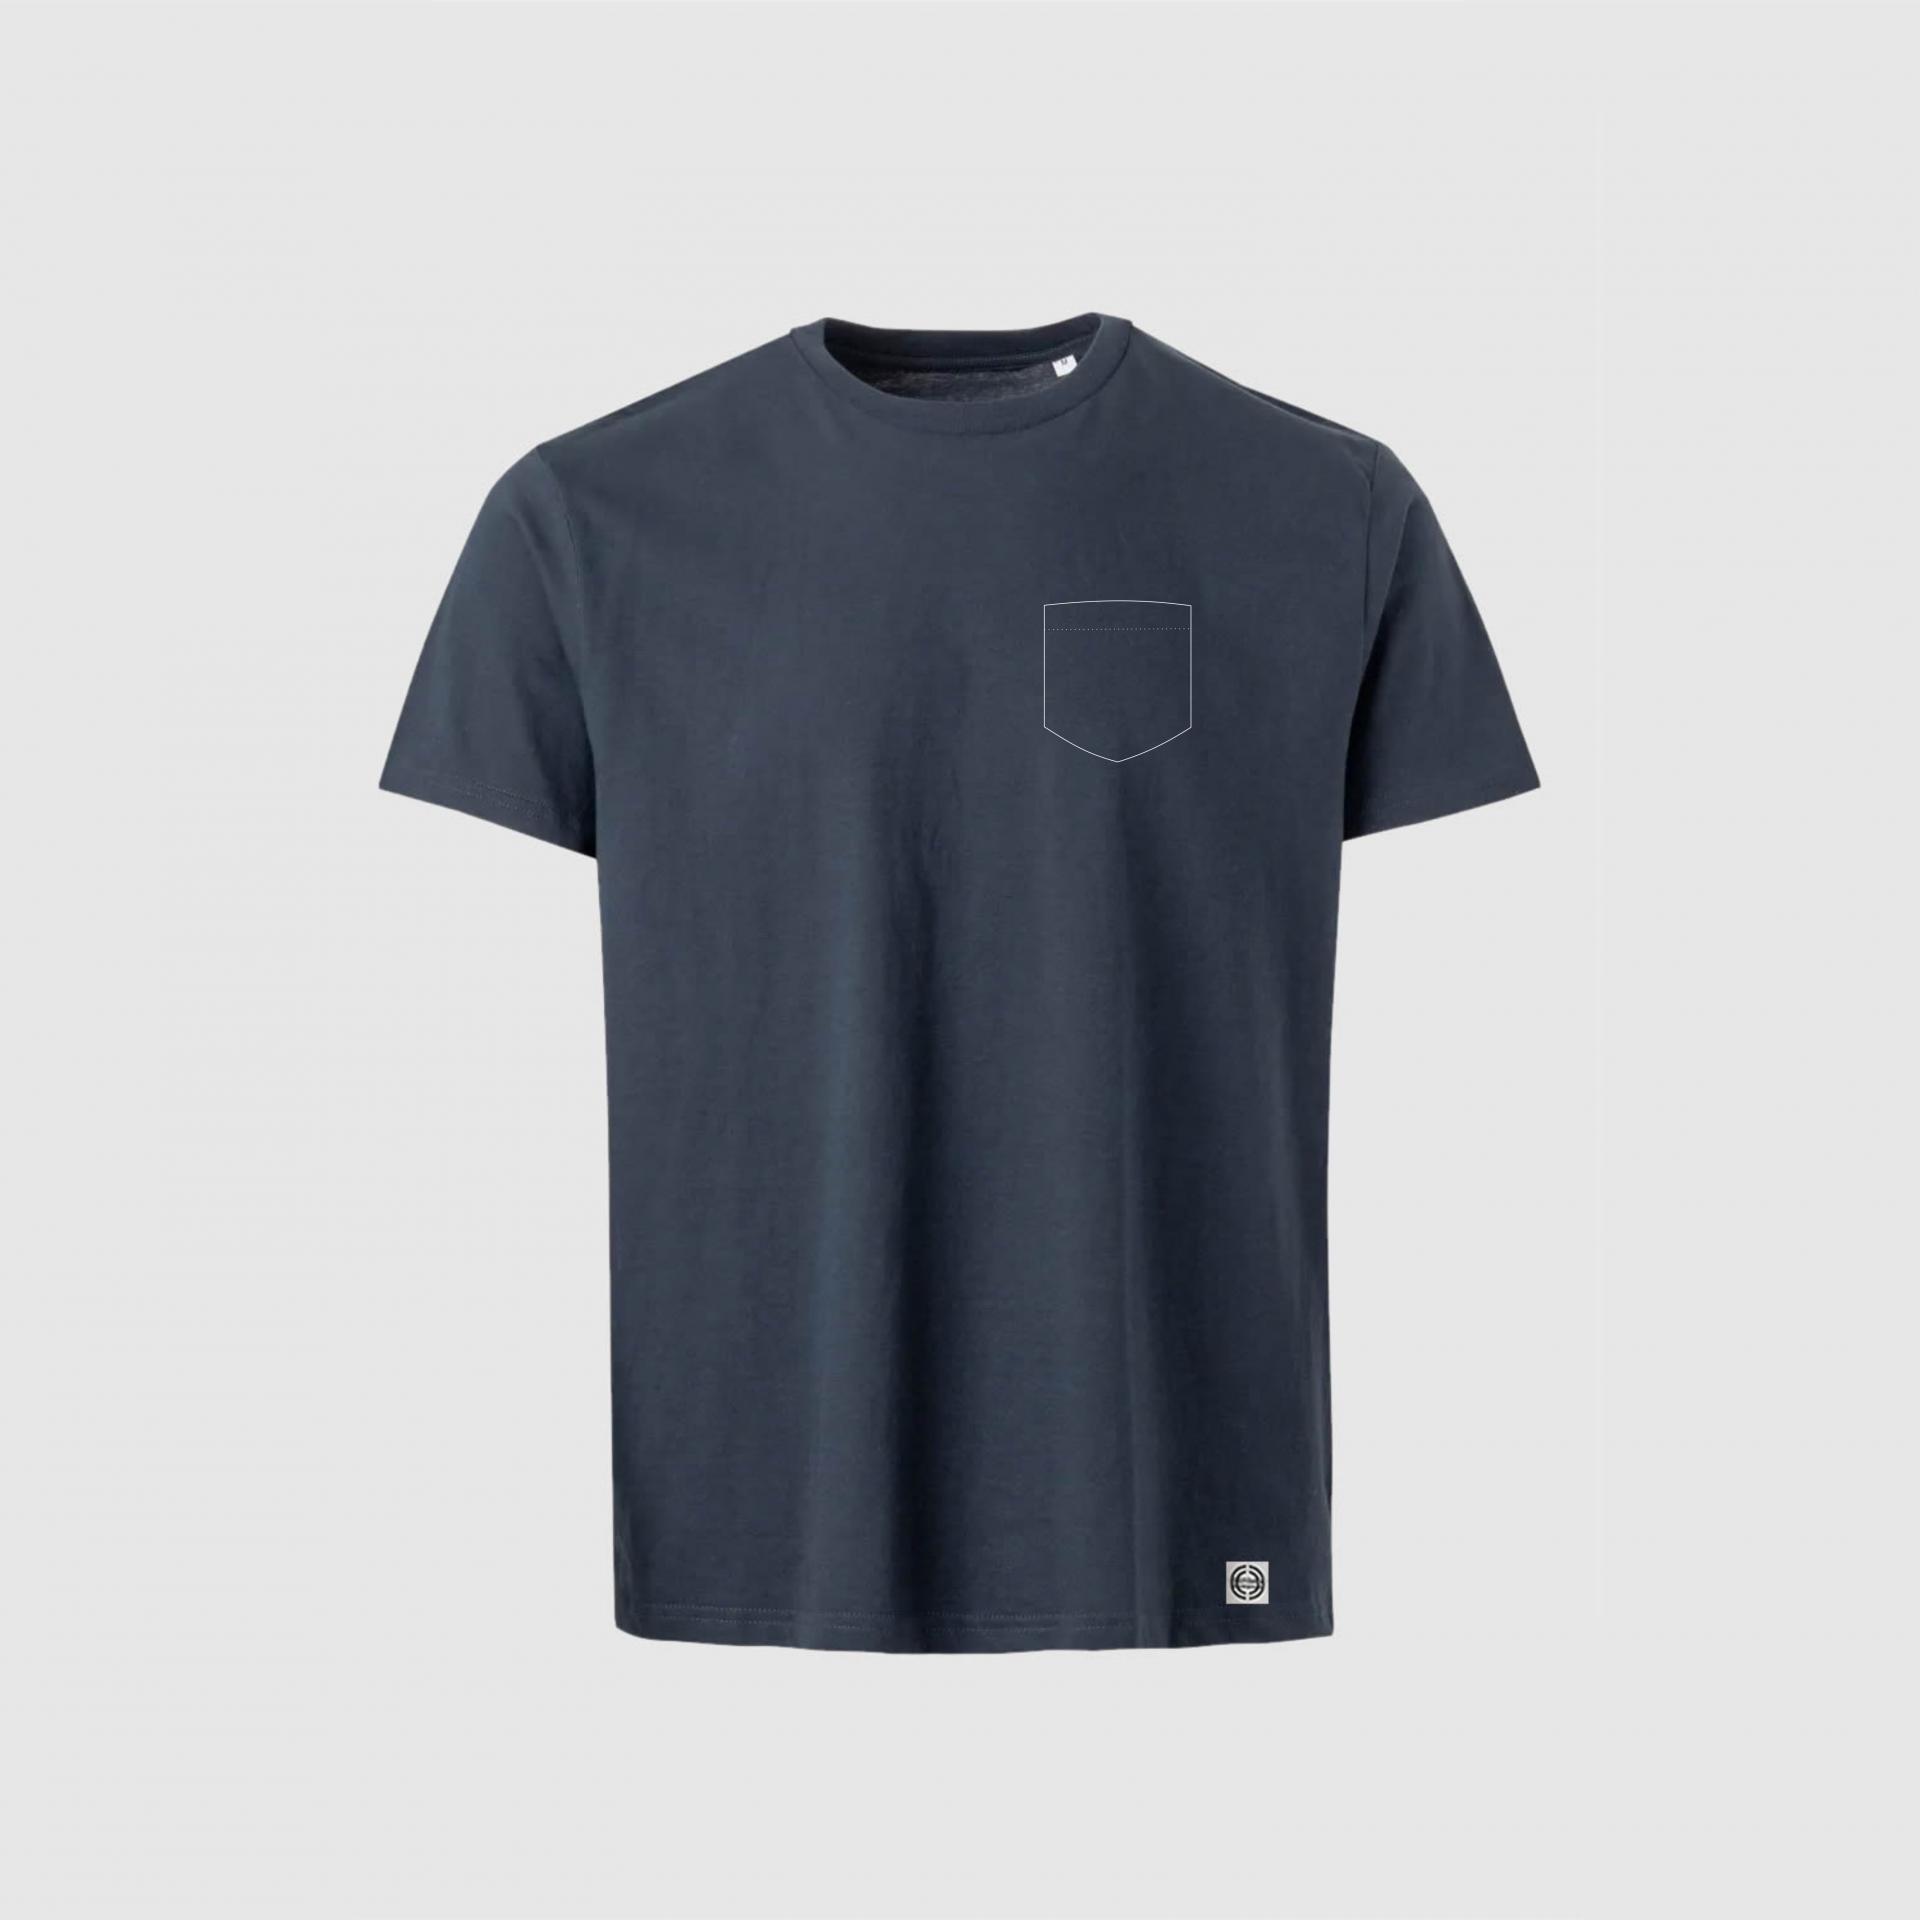 Camiseta unisex algodón orgánico bolsillo personalizado color azul marino